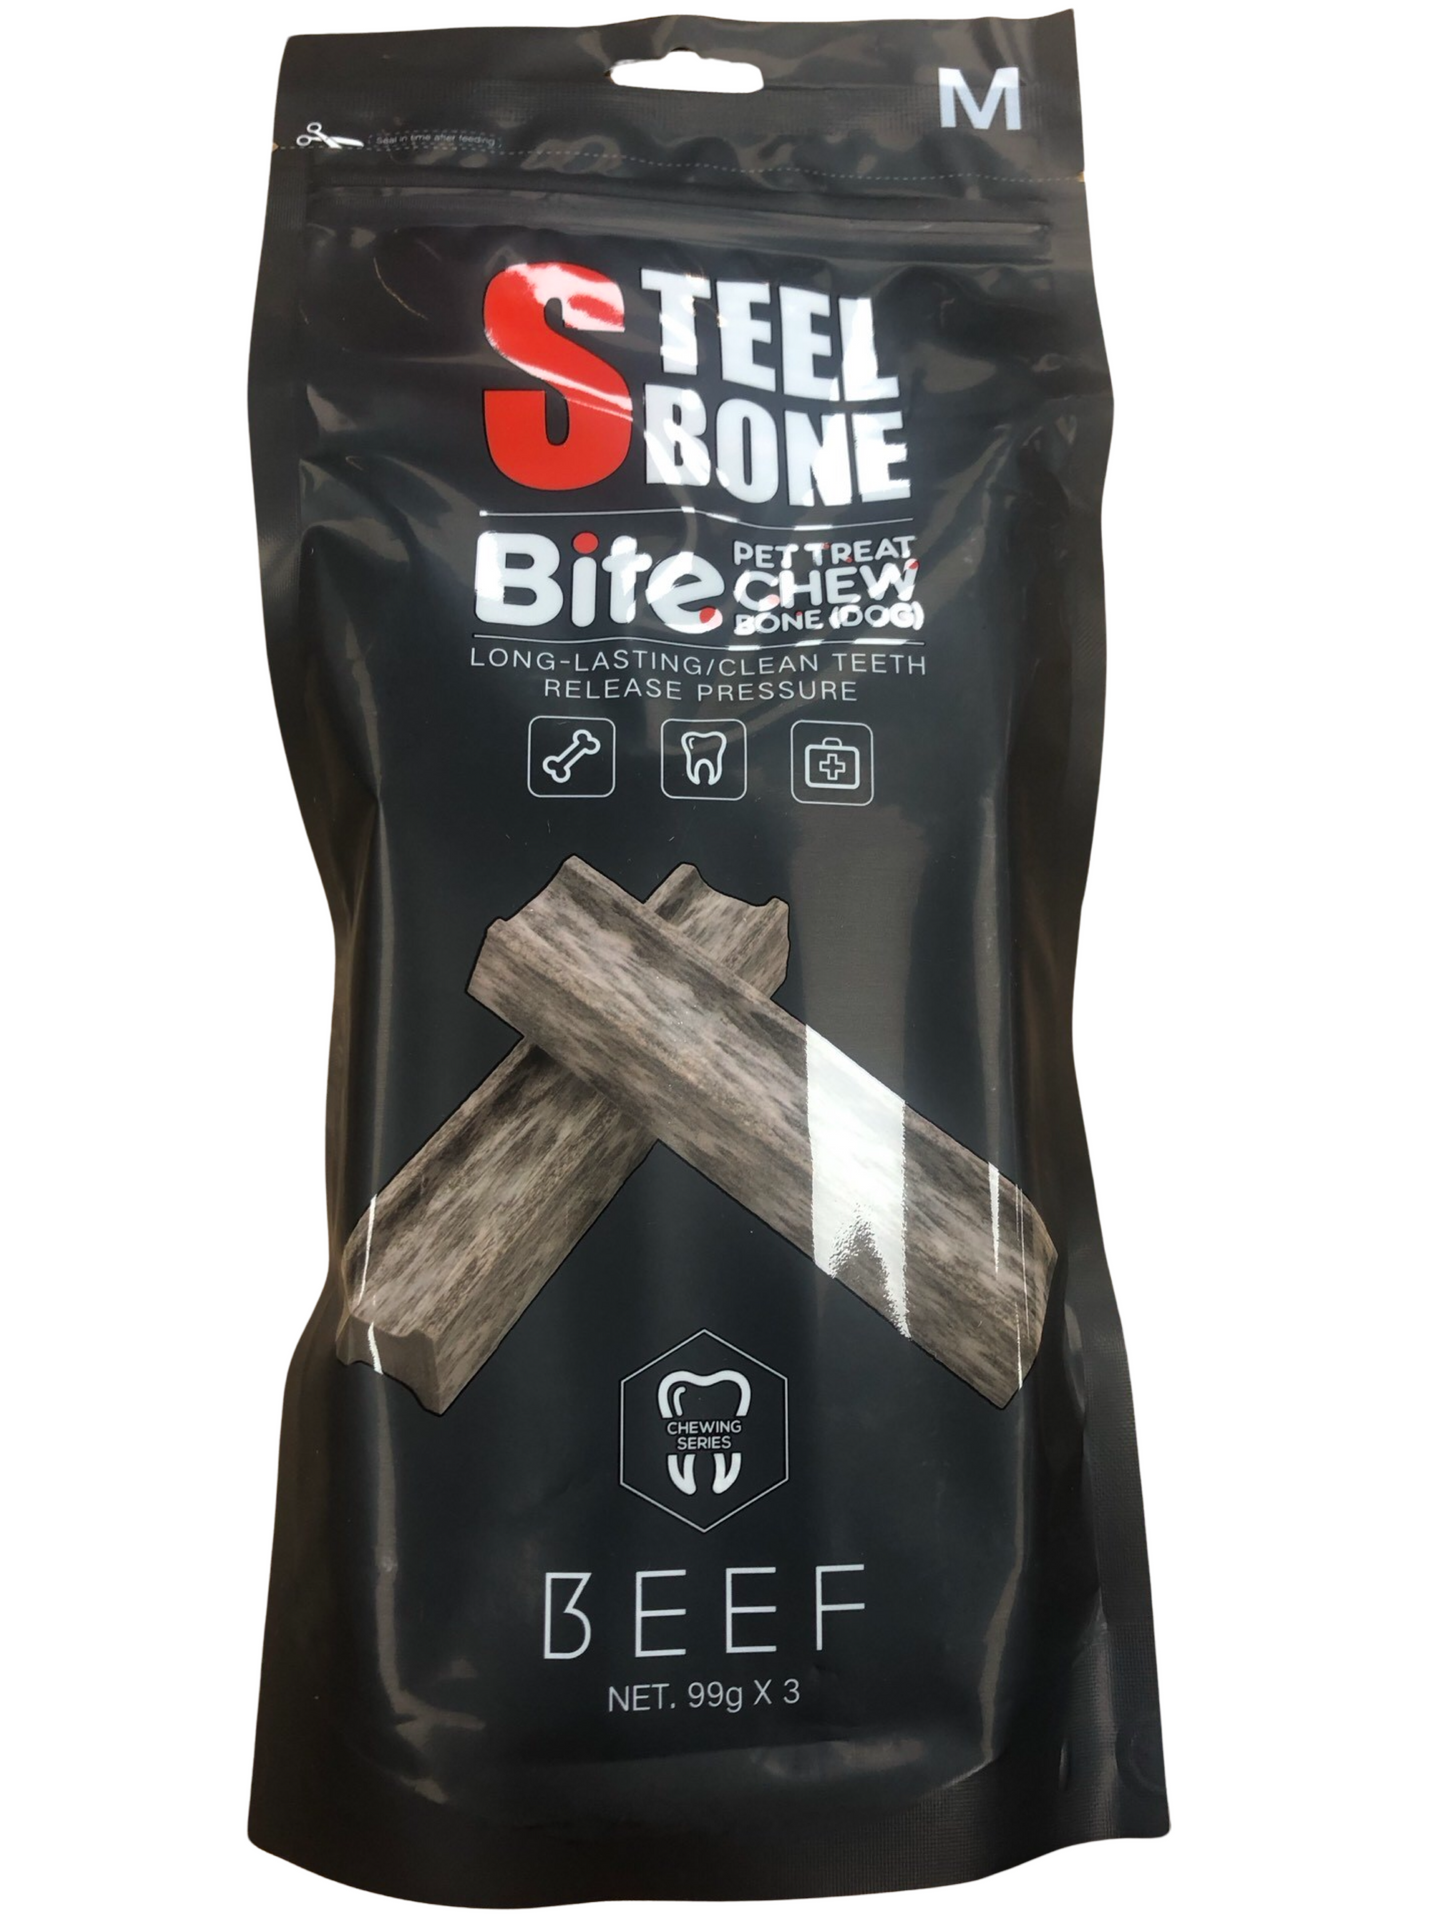 Steel Bone long lasting dog bones 3pk BEEF flavour. Medium dog